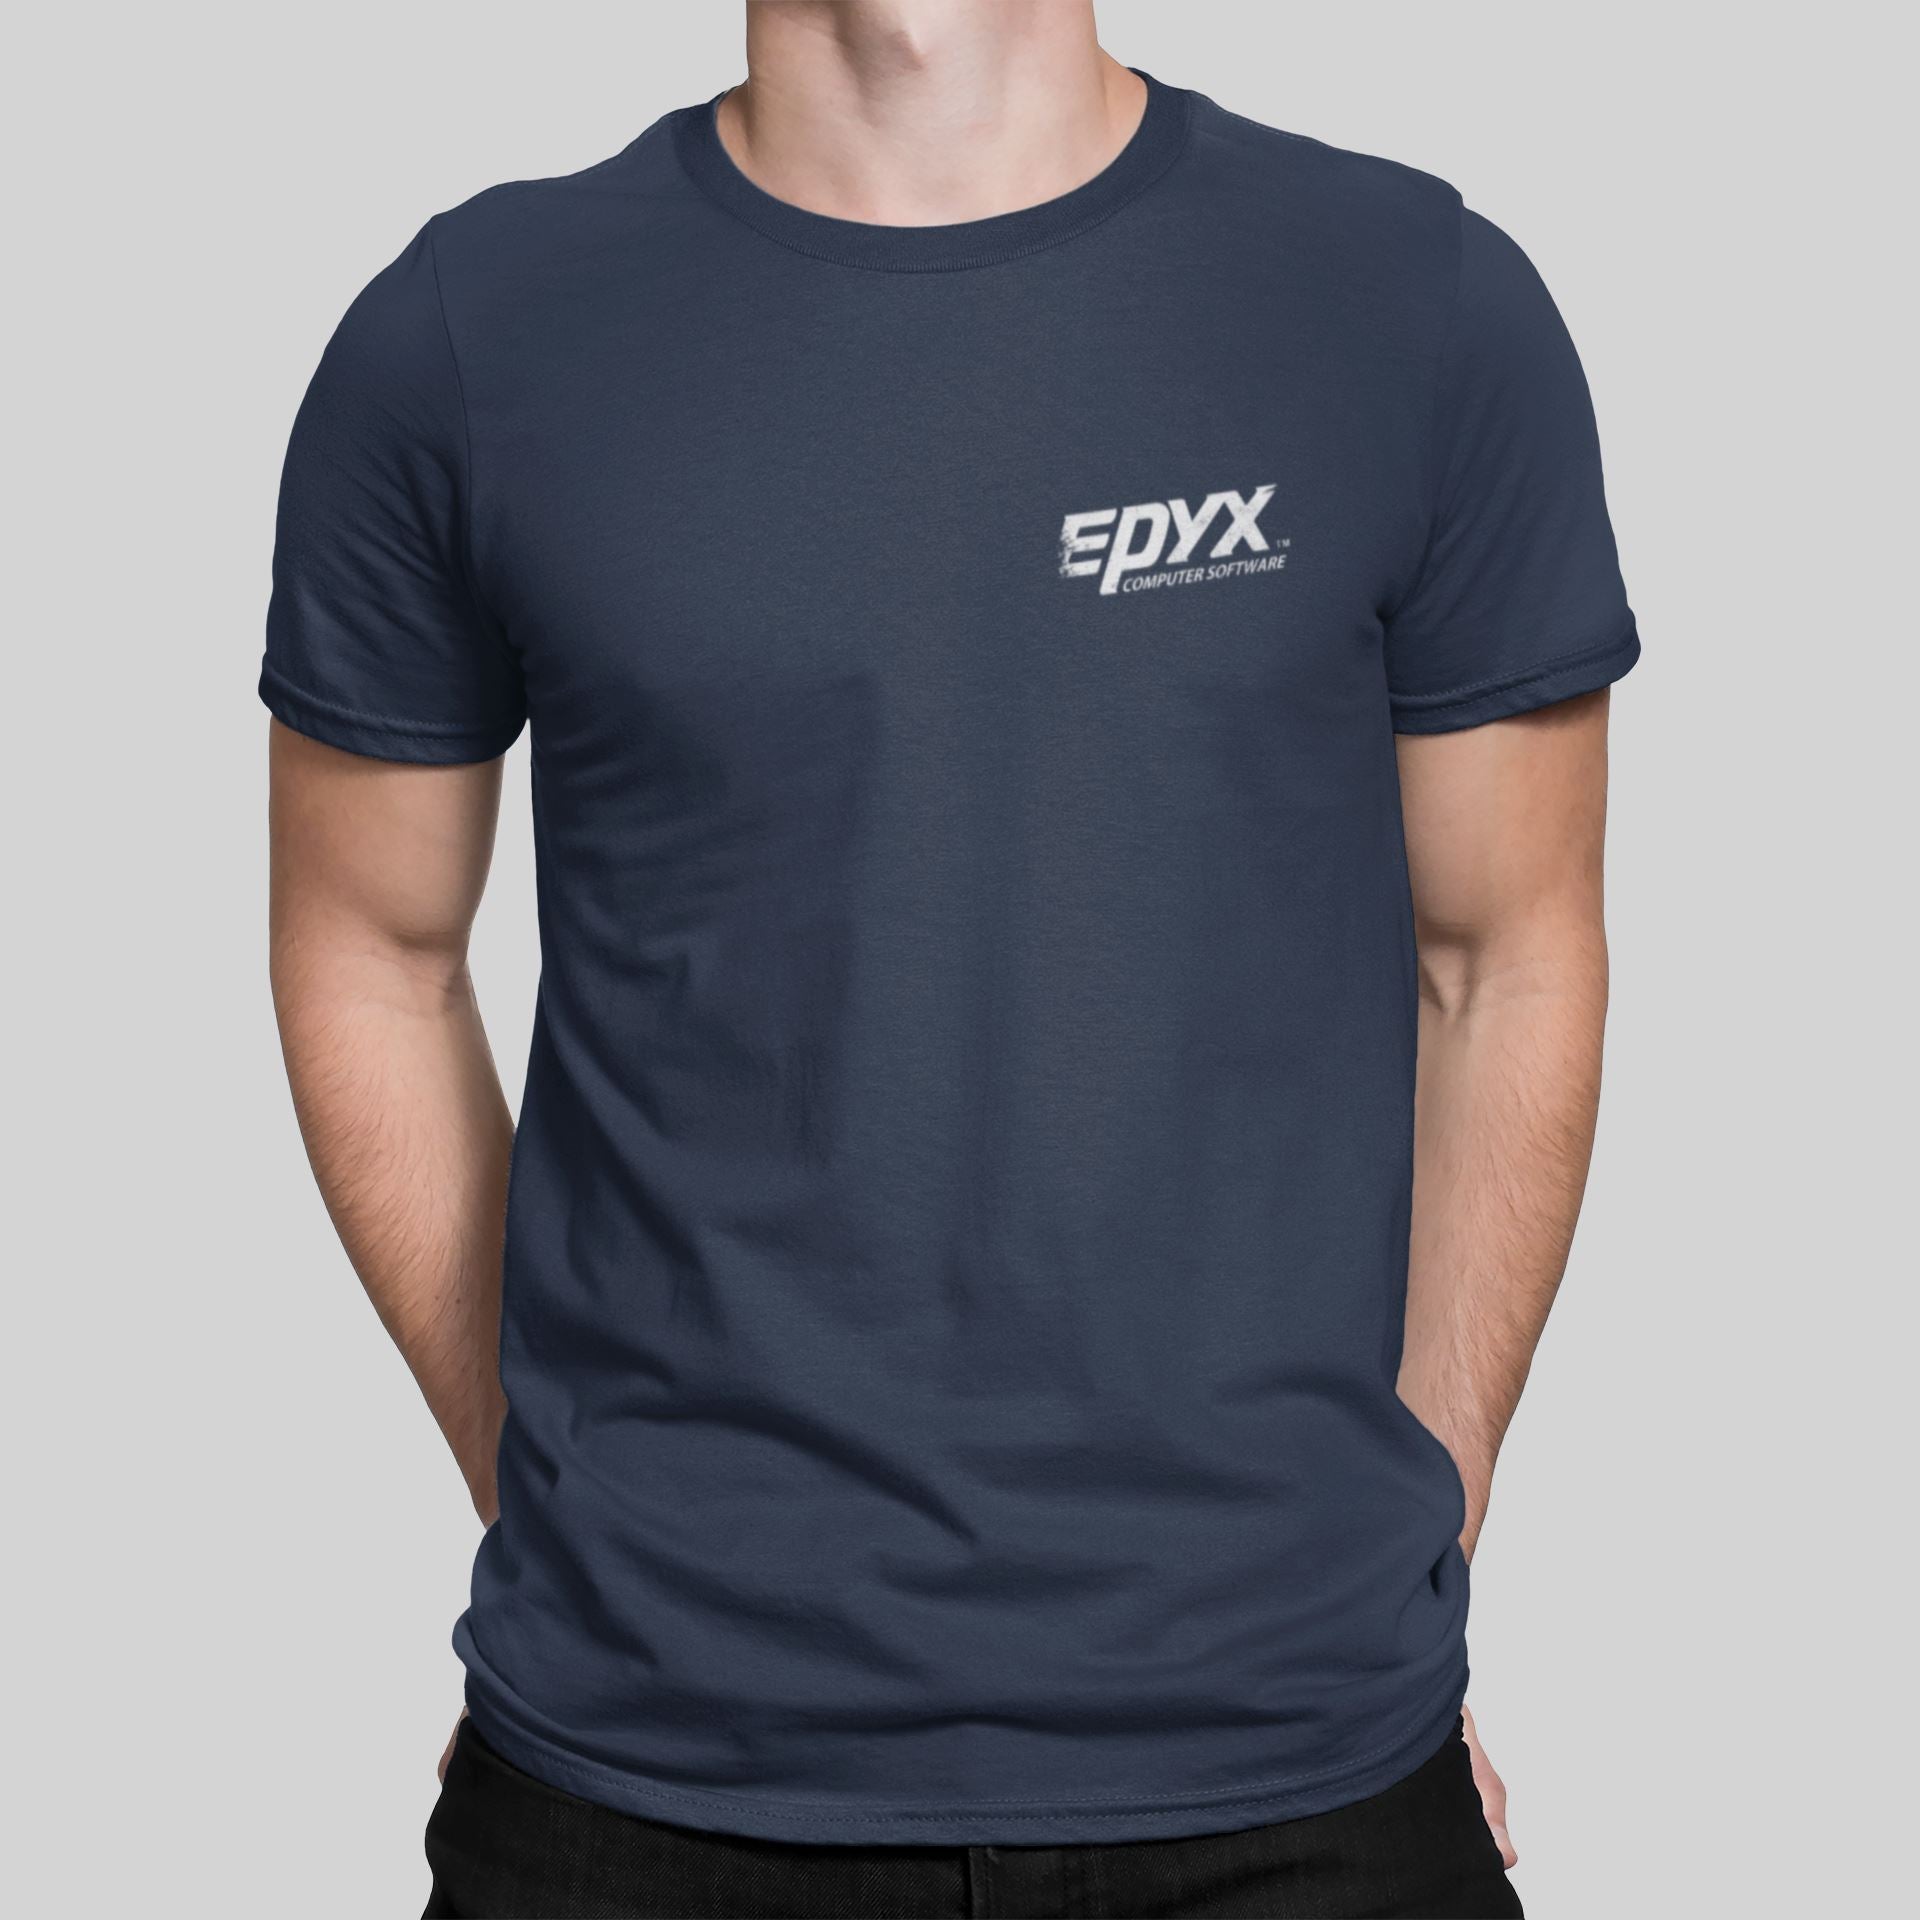 Epyx Software Pocket Print Retro Gaming T-Shirt T-Shirt Seven Squared Small 34-36" Navy 